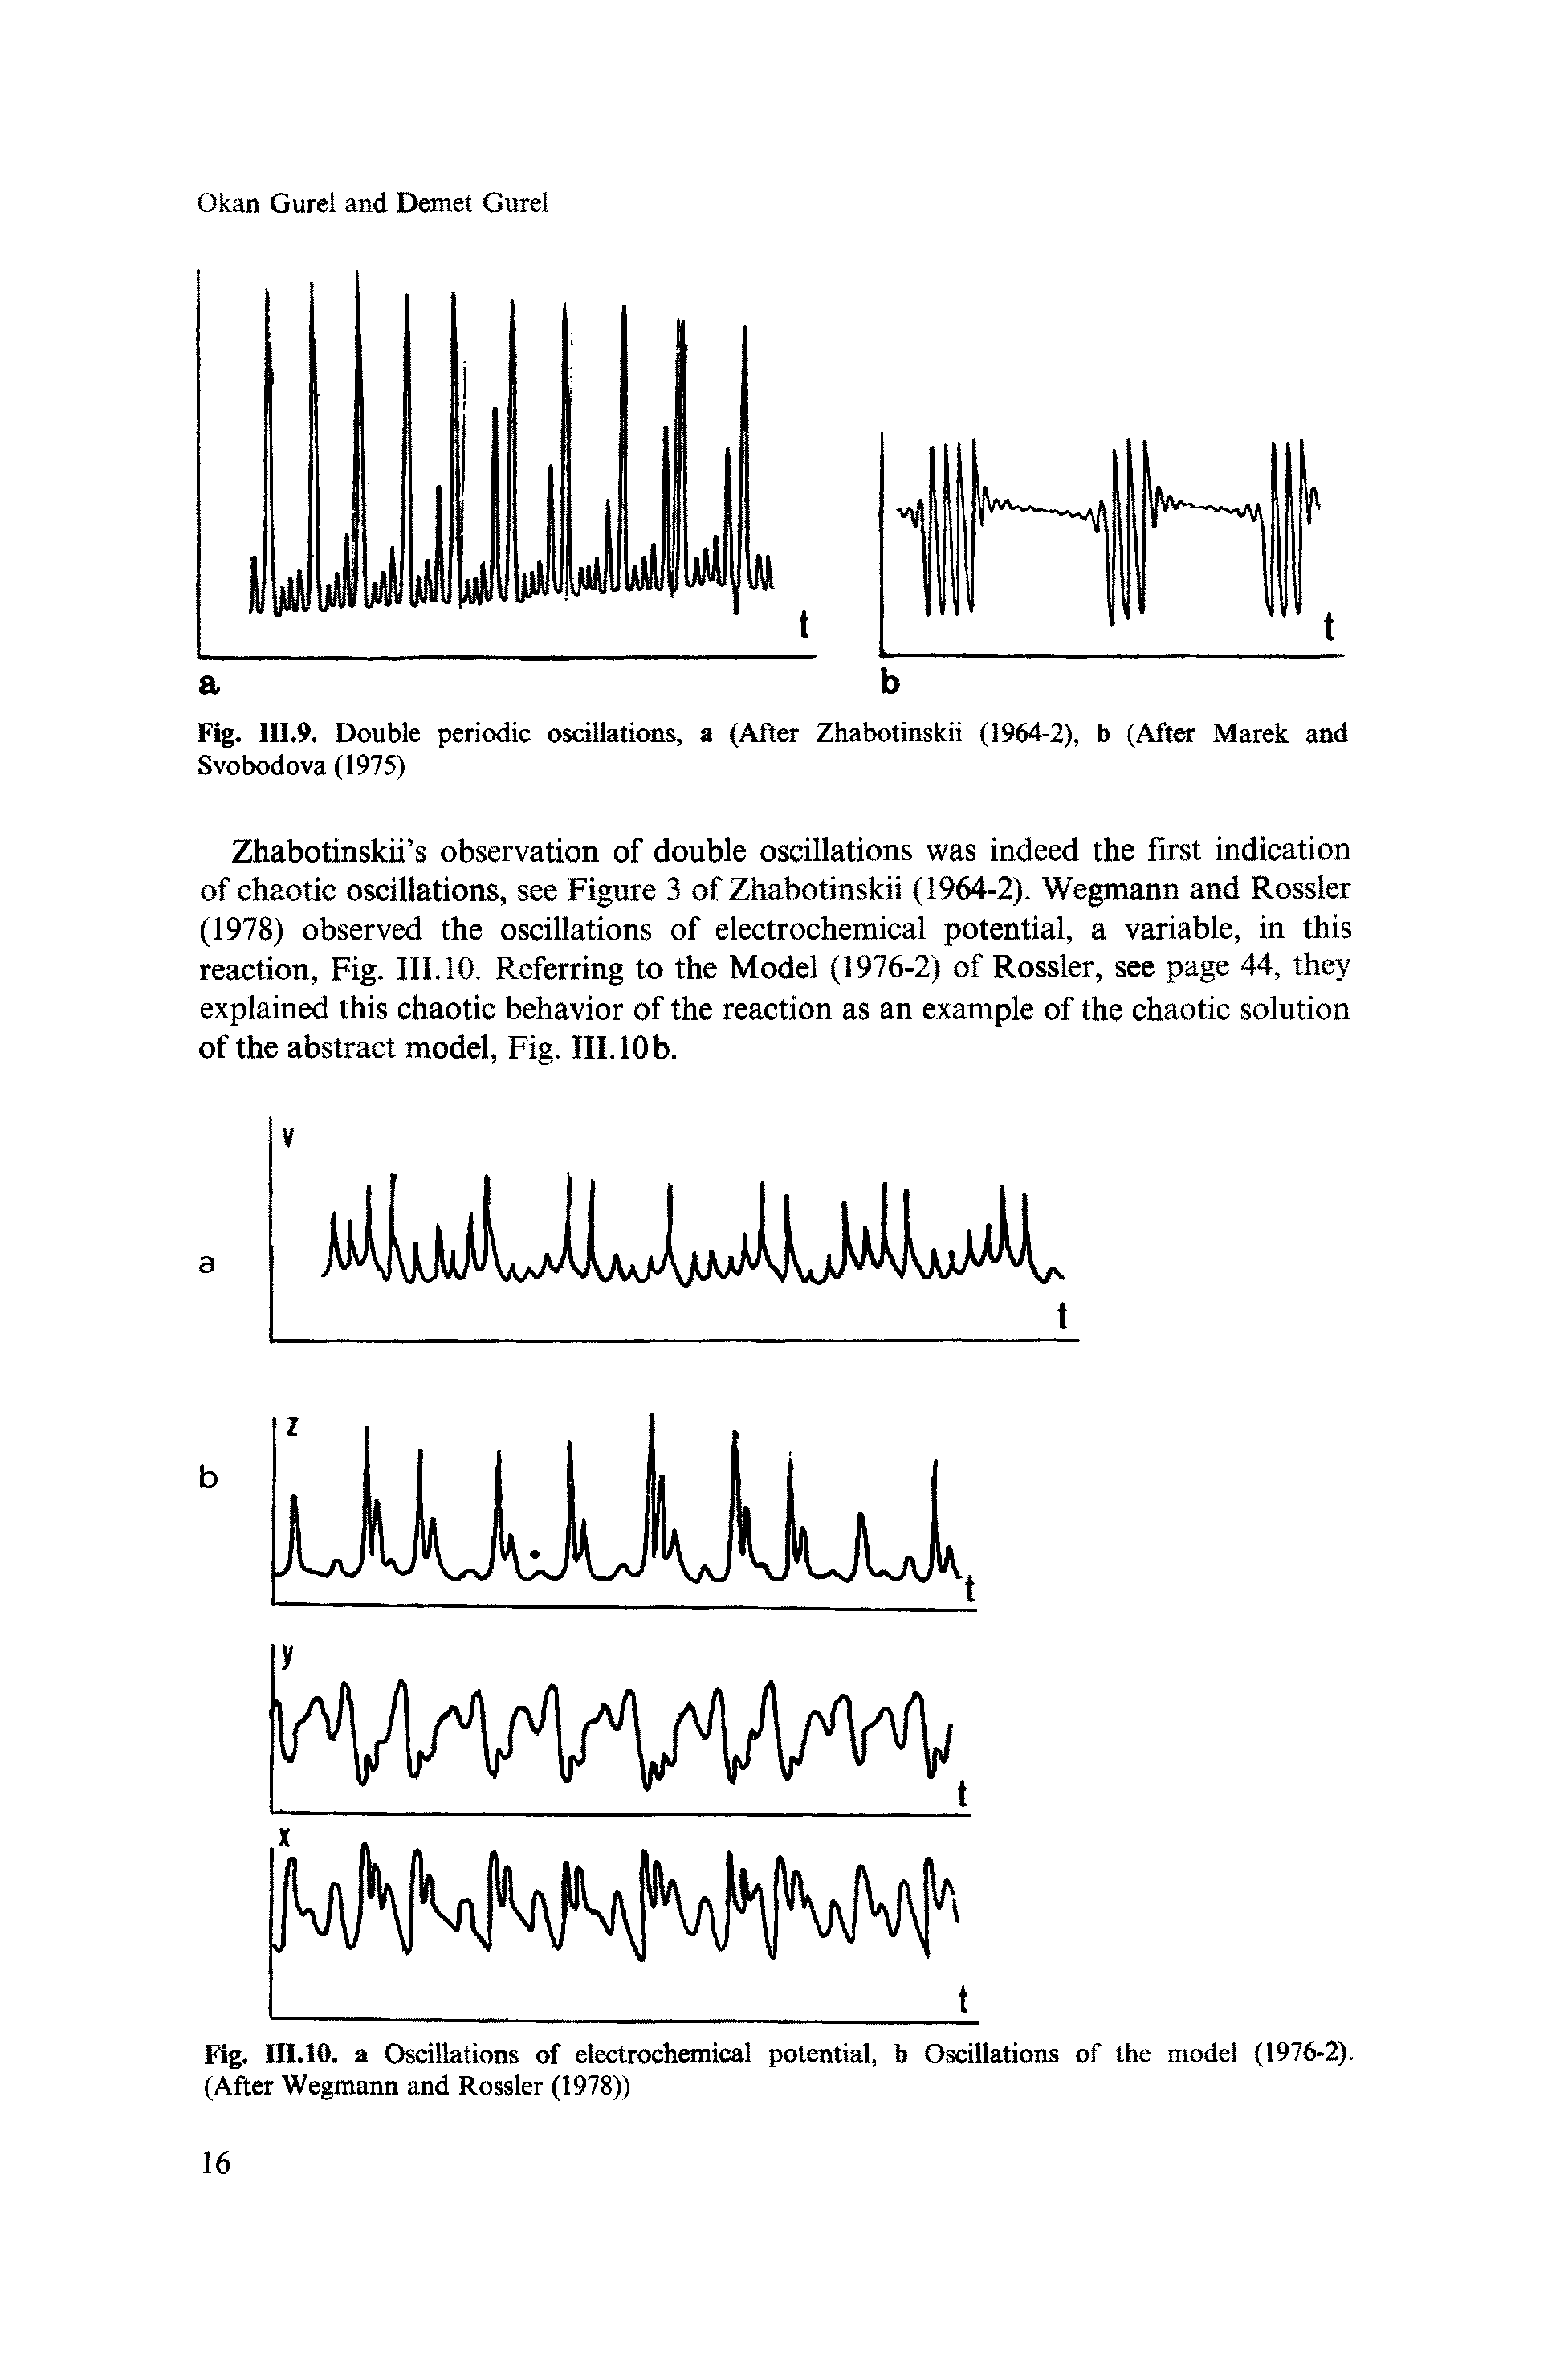 Fig. Ill. 9. Double periodic oscillations, a (After Zhabotinskii (1964-2), b (After Marek and Svobodova (1975)...